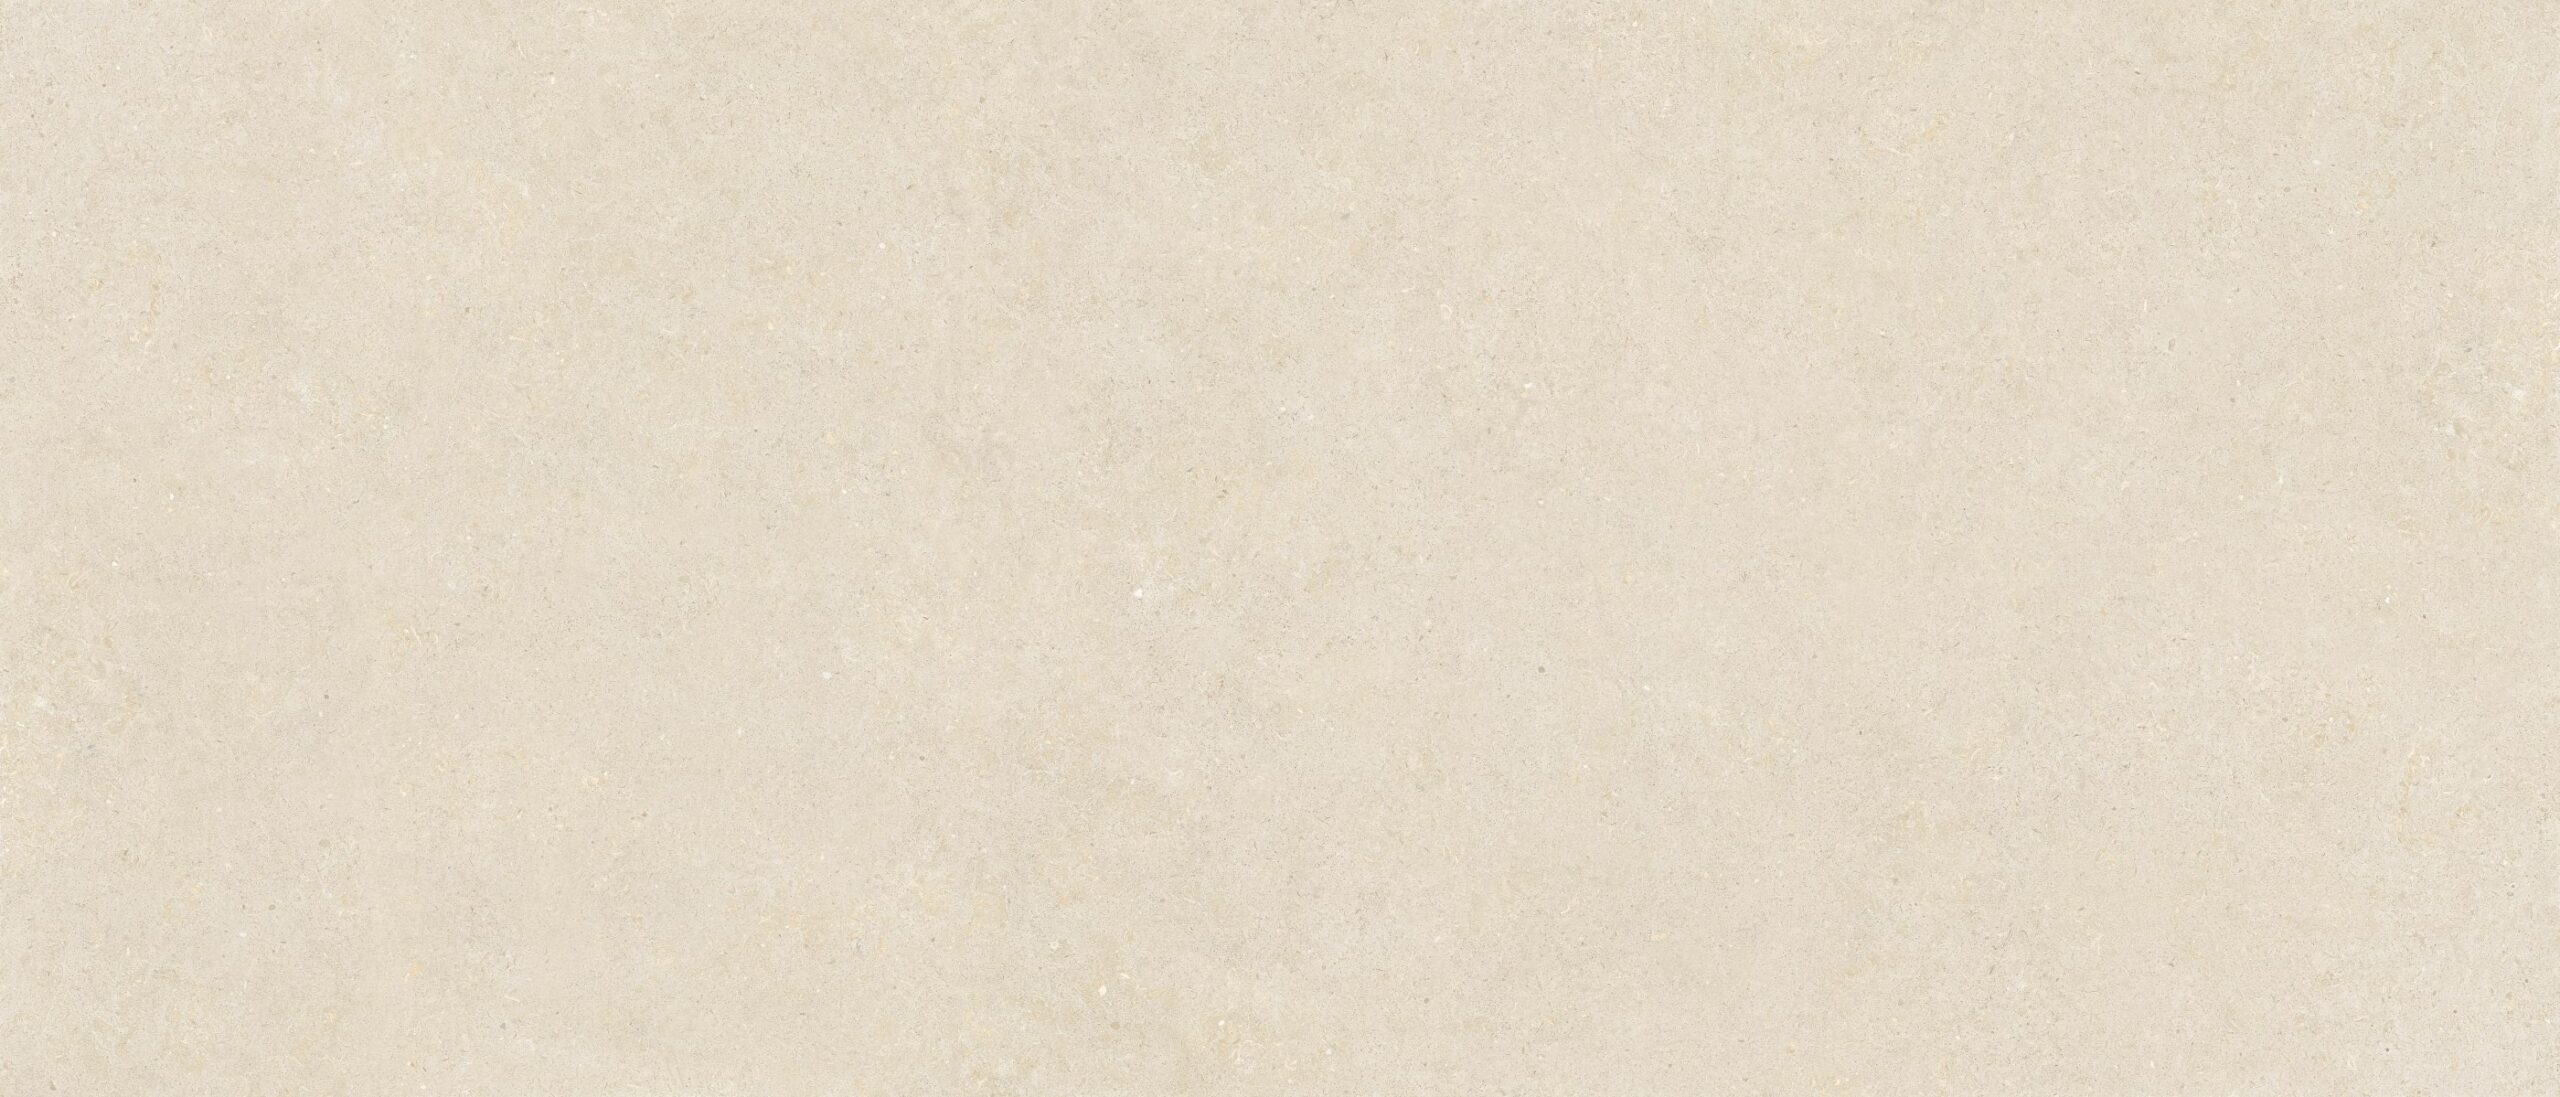 SOMPORT SAND 120×280 copia (1200) 88%